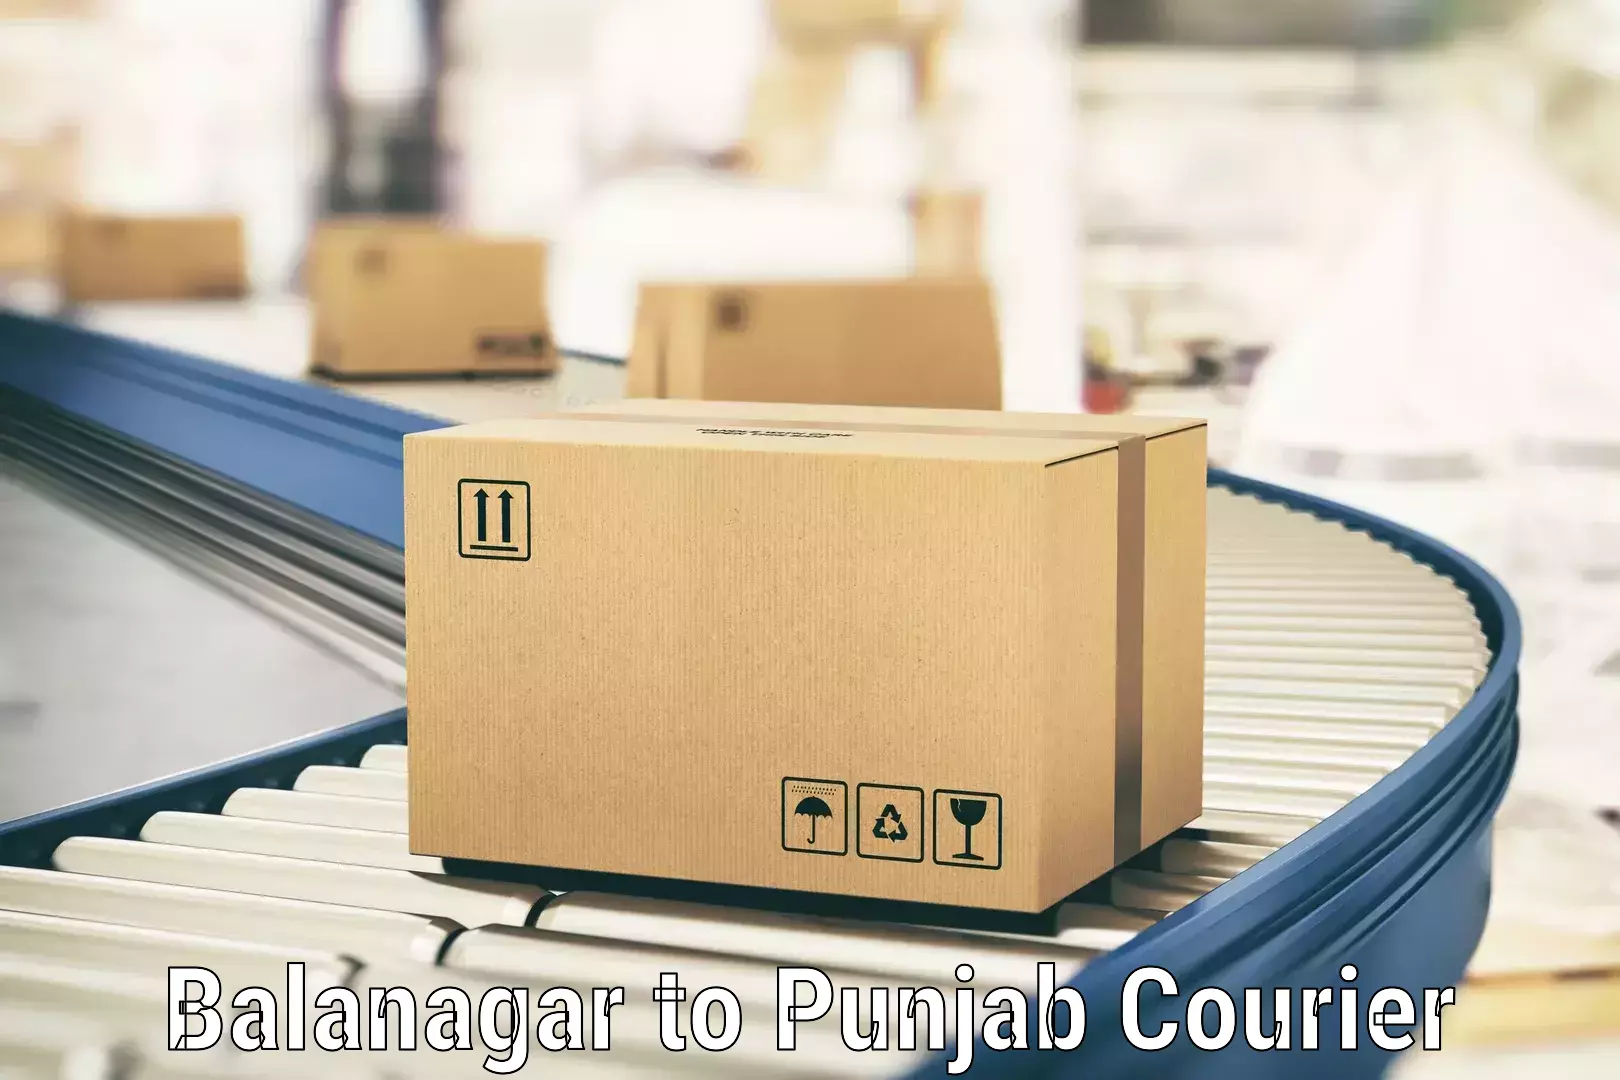 Courier dispatch services Balanagar to Dhilwan